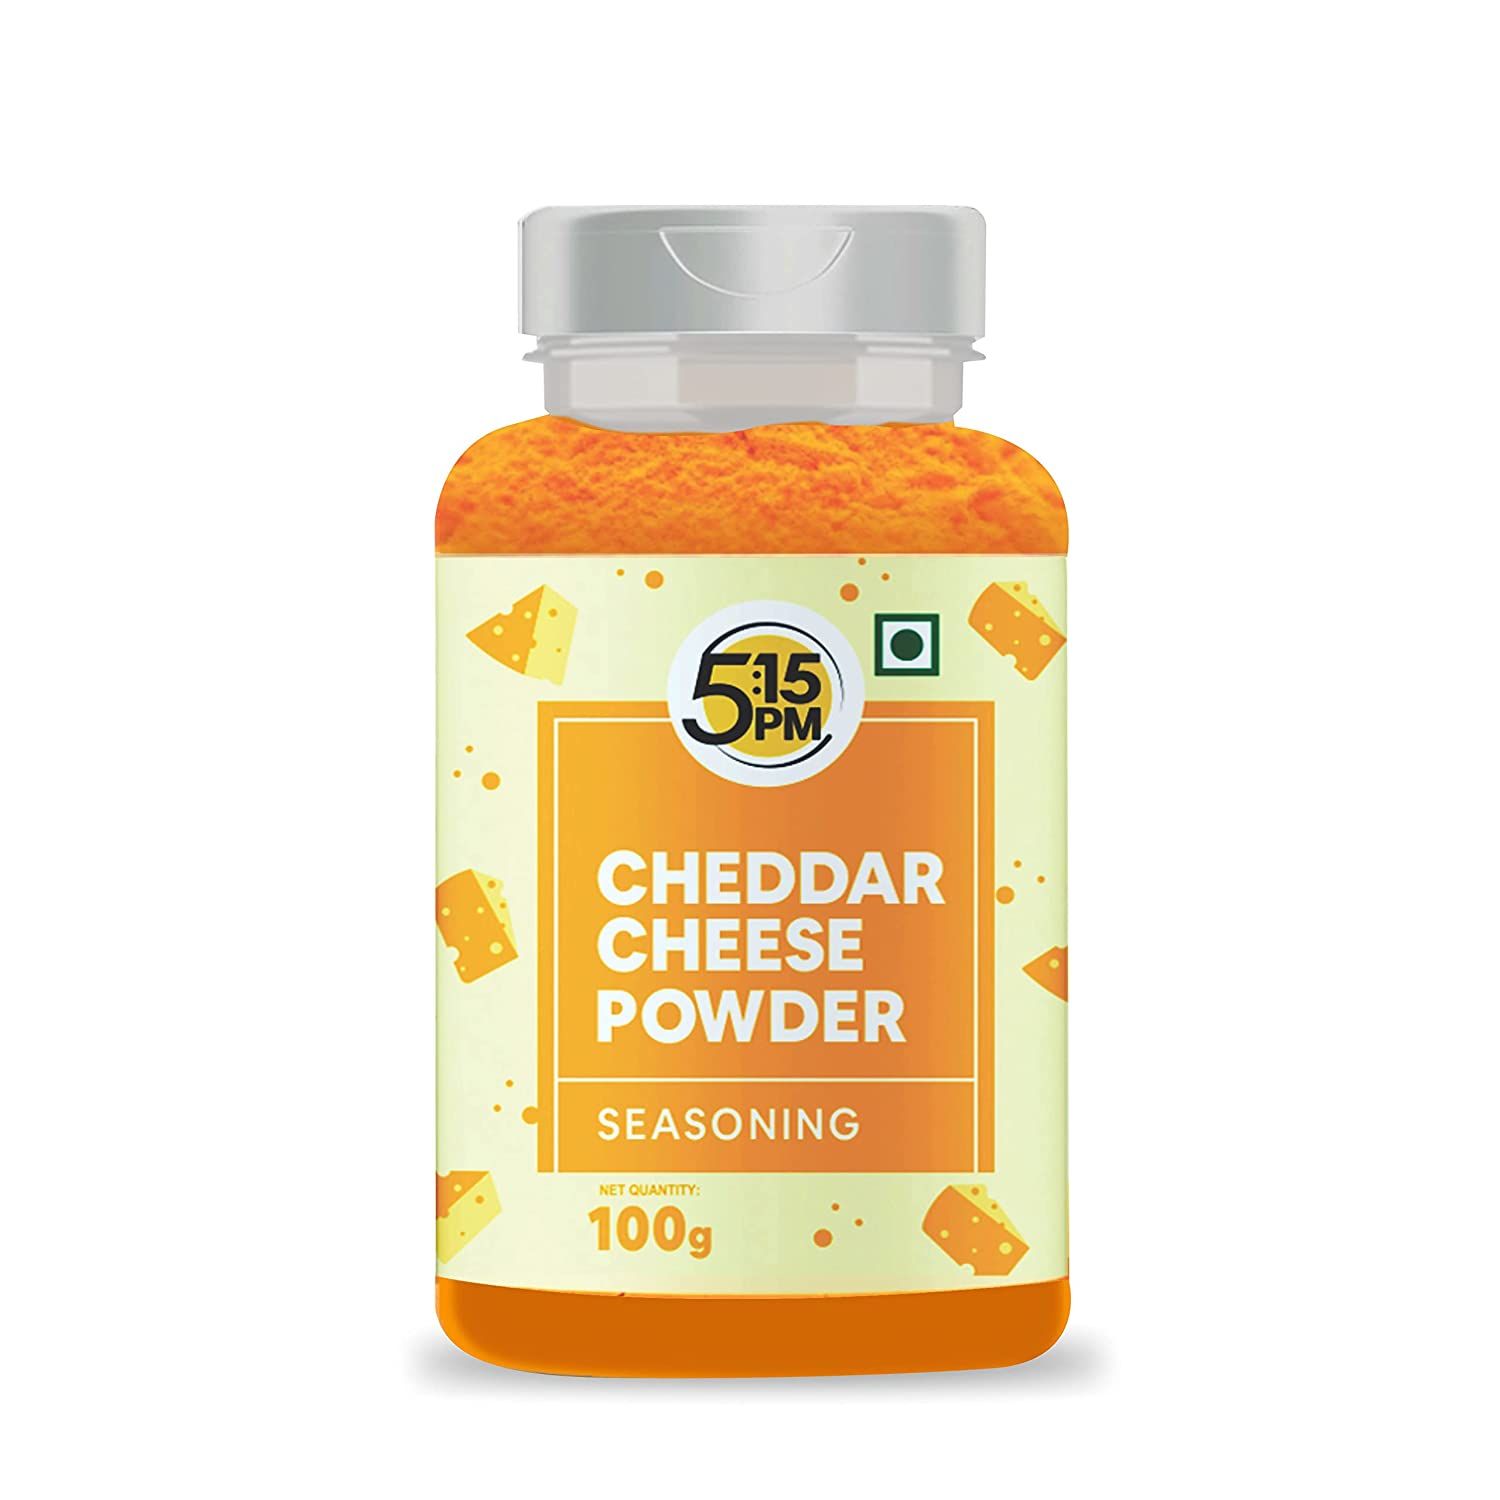 5:15 Pm Cheddar Cheese Powder Image